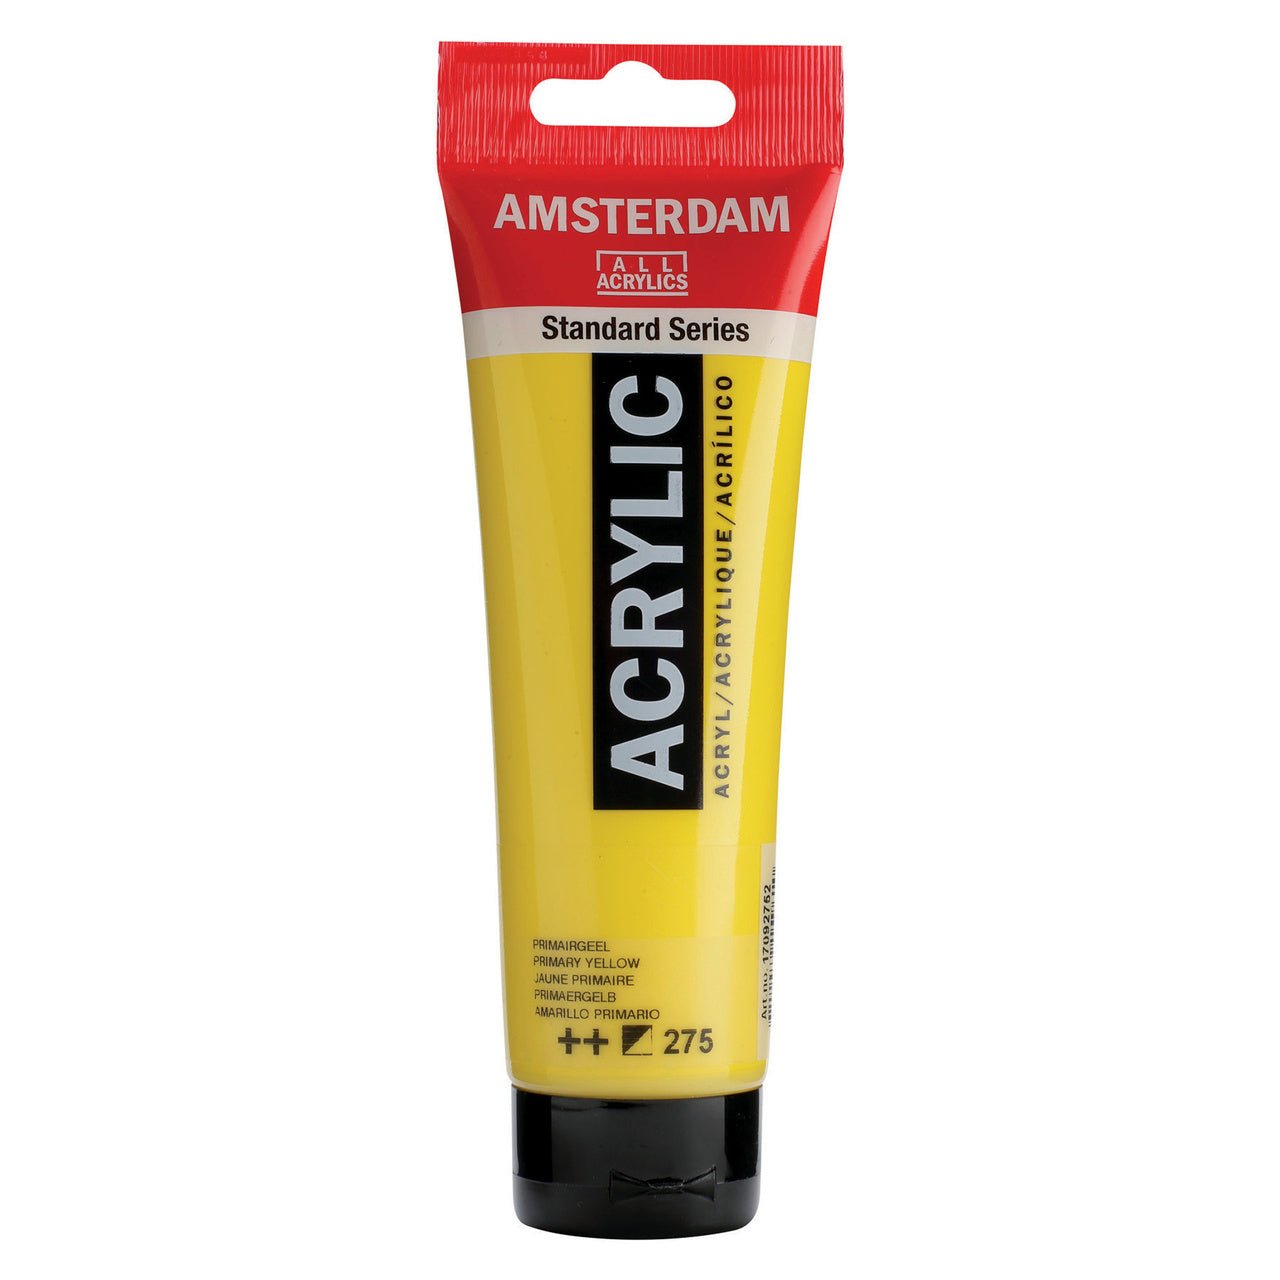 Amsterdam Standard Acrylic Paint 120ml Primary Yellow - merriartist.com